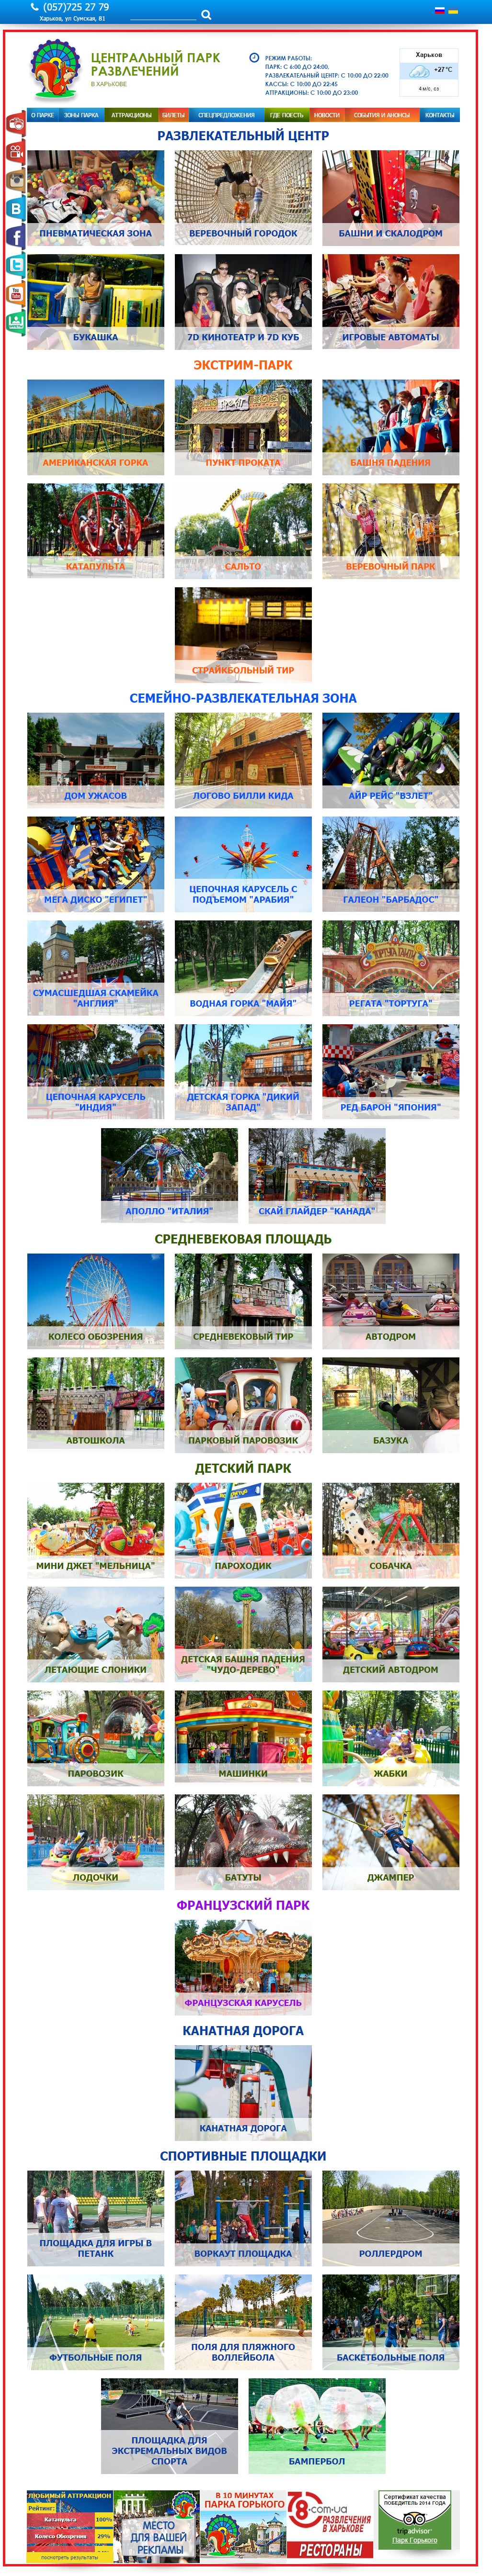 http://centralpark.kh.ua/attractions.html